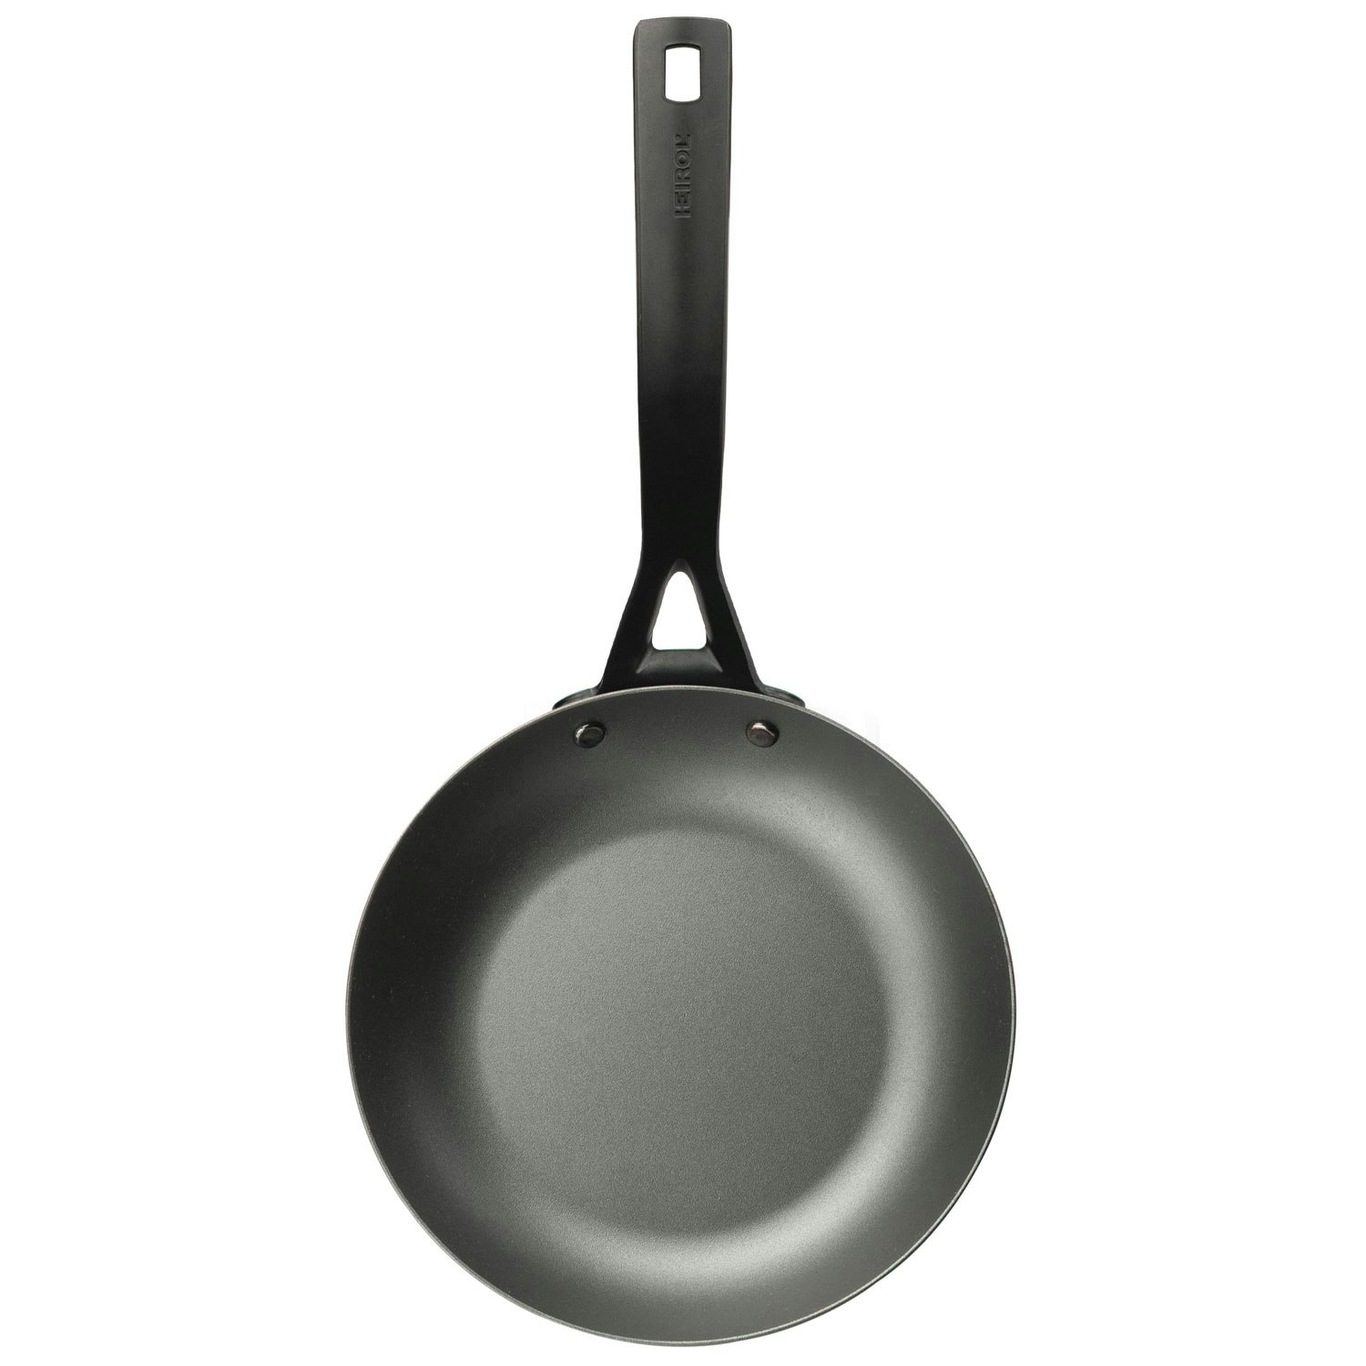 Blacksteel Pro Frying Pan, 20 cm